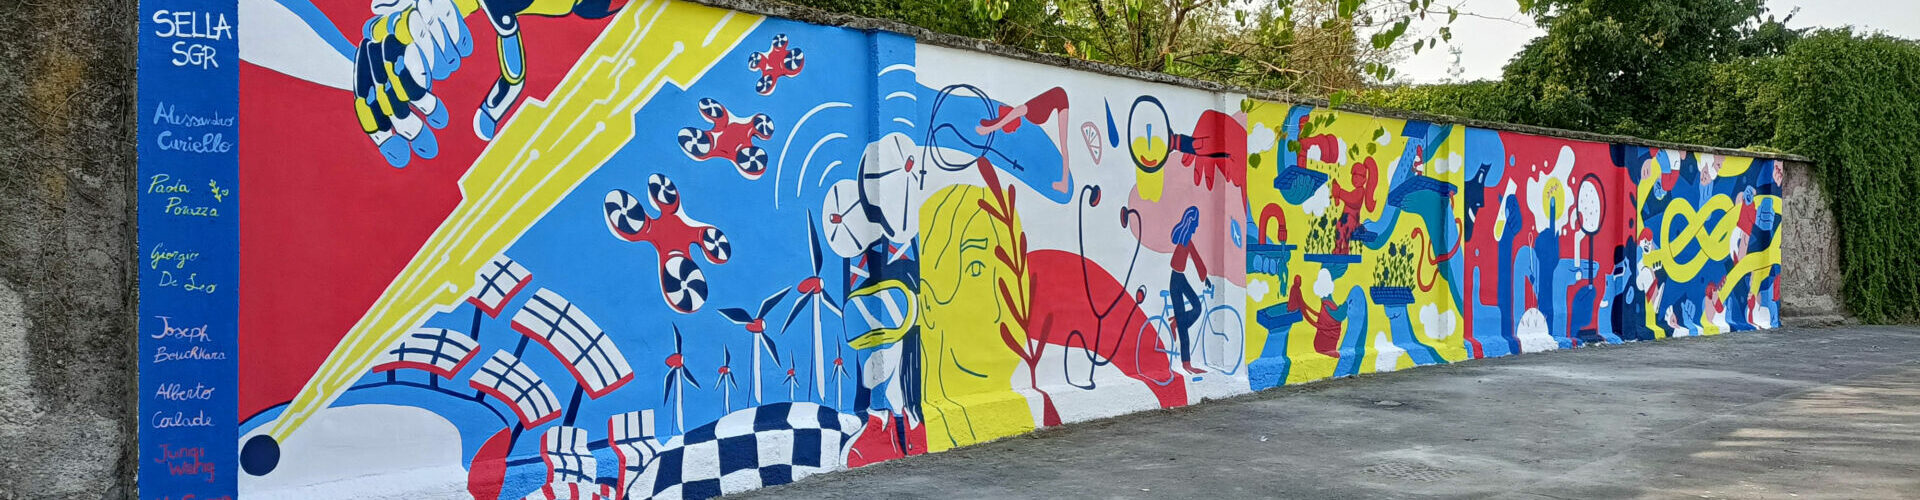 Street art Milano